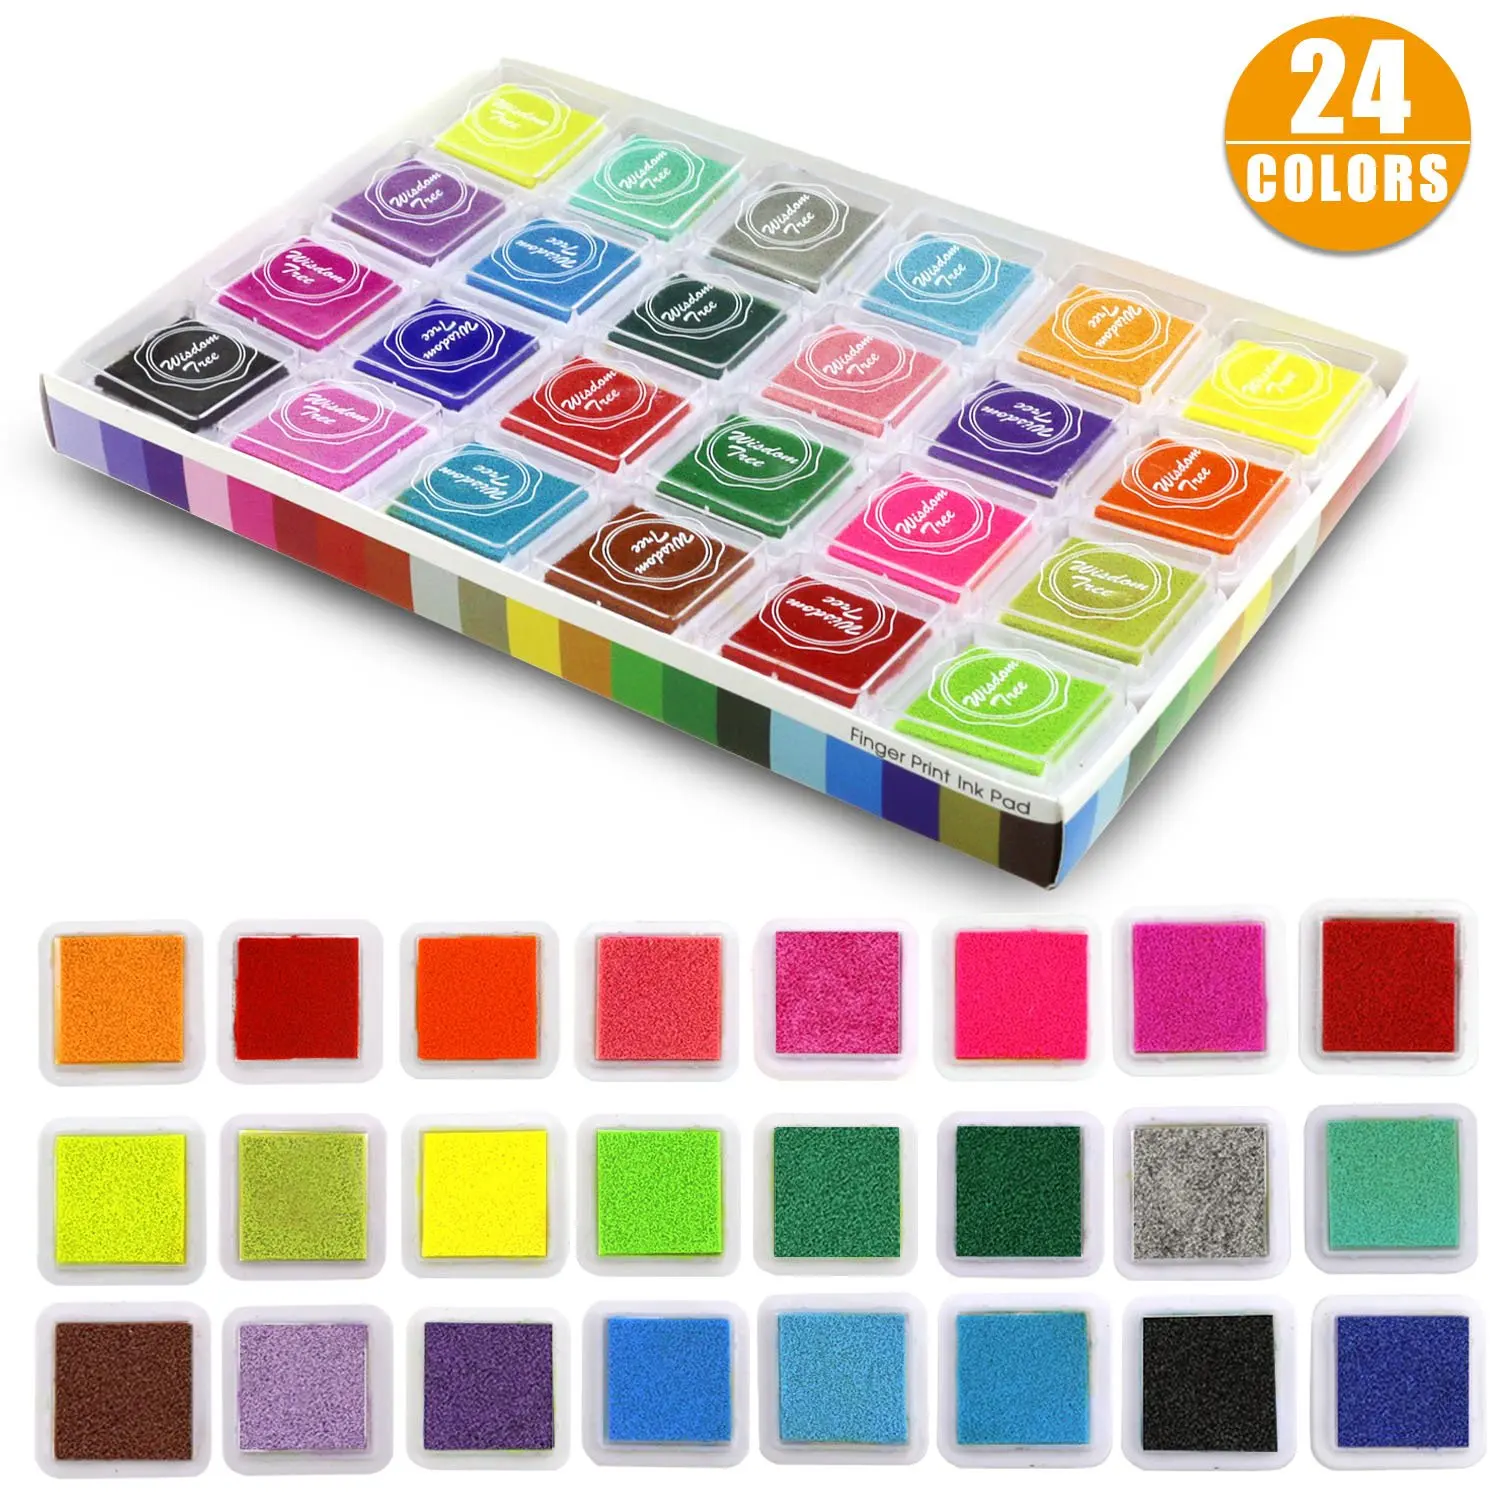 Craft ink pad Stamps ink pad Circle Multipurpose ink pad Colorful ink pad Fingerprint ink pad